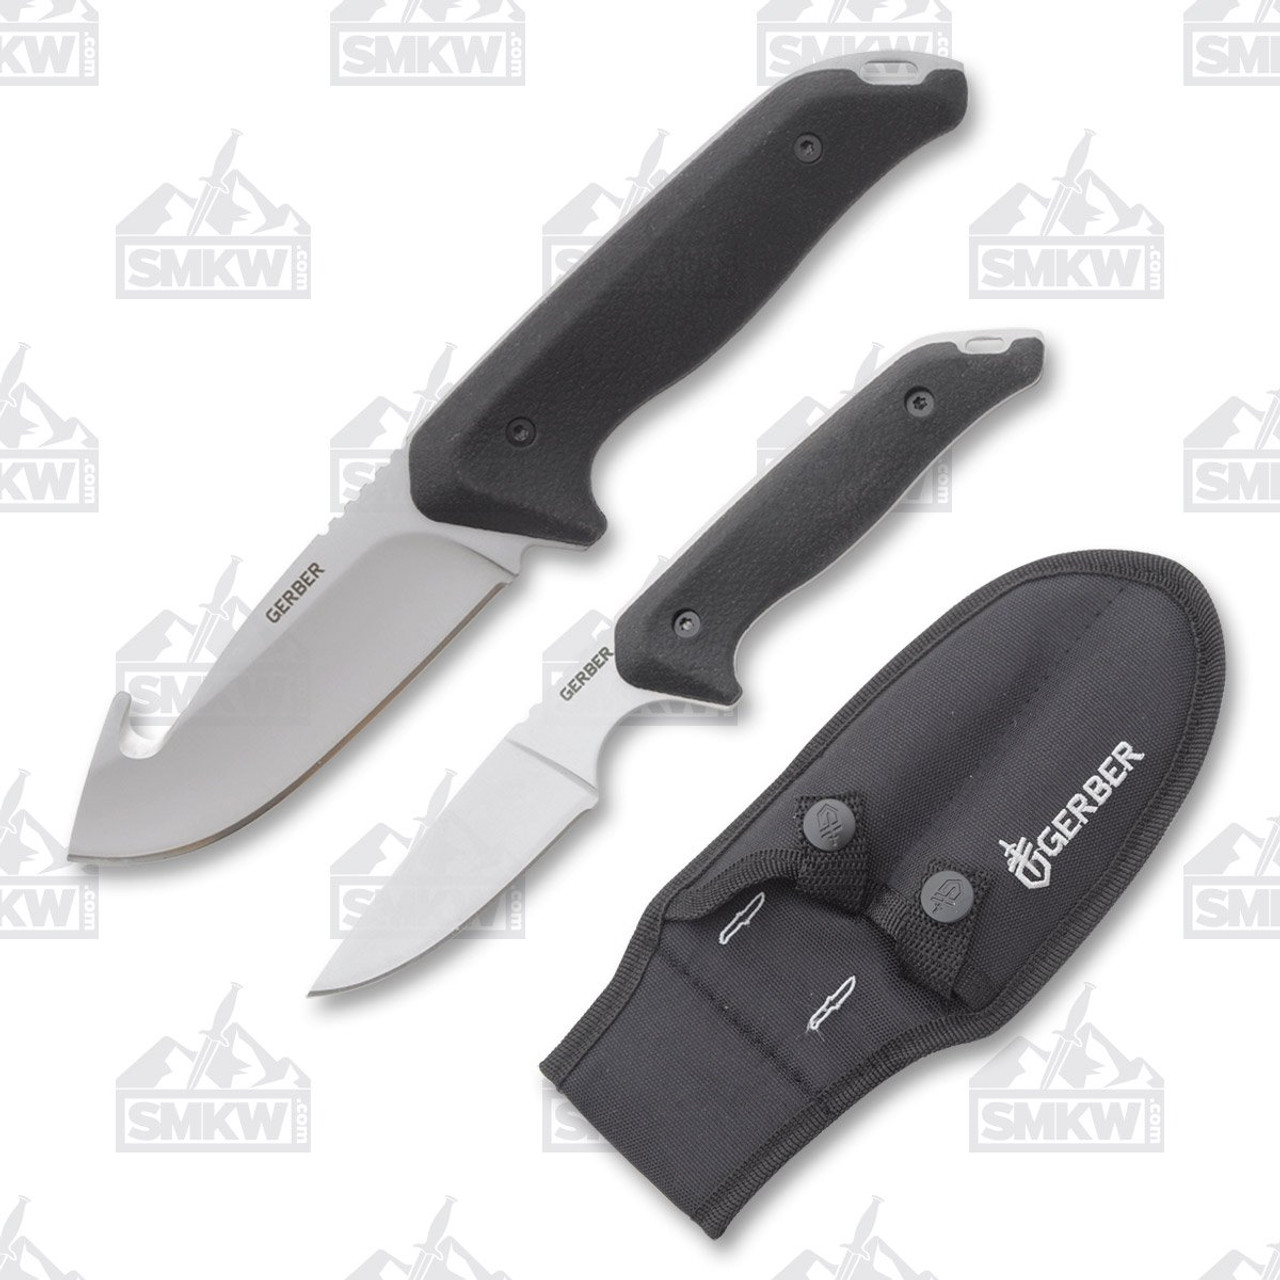 Gerber Knife Care Kit